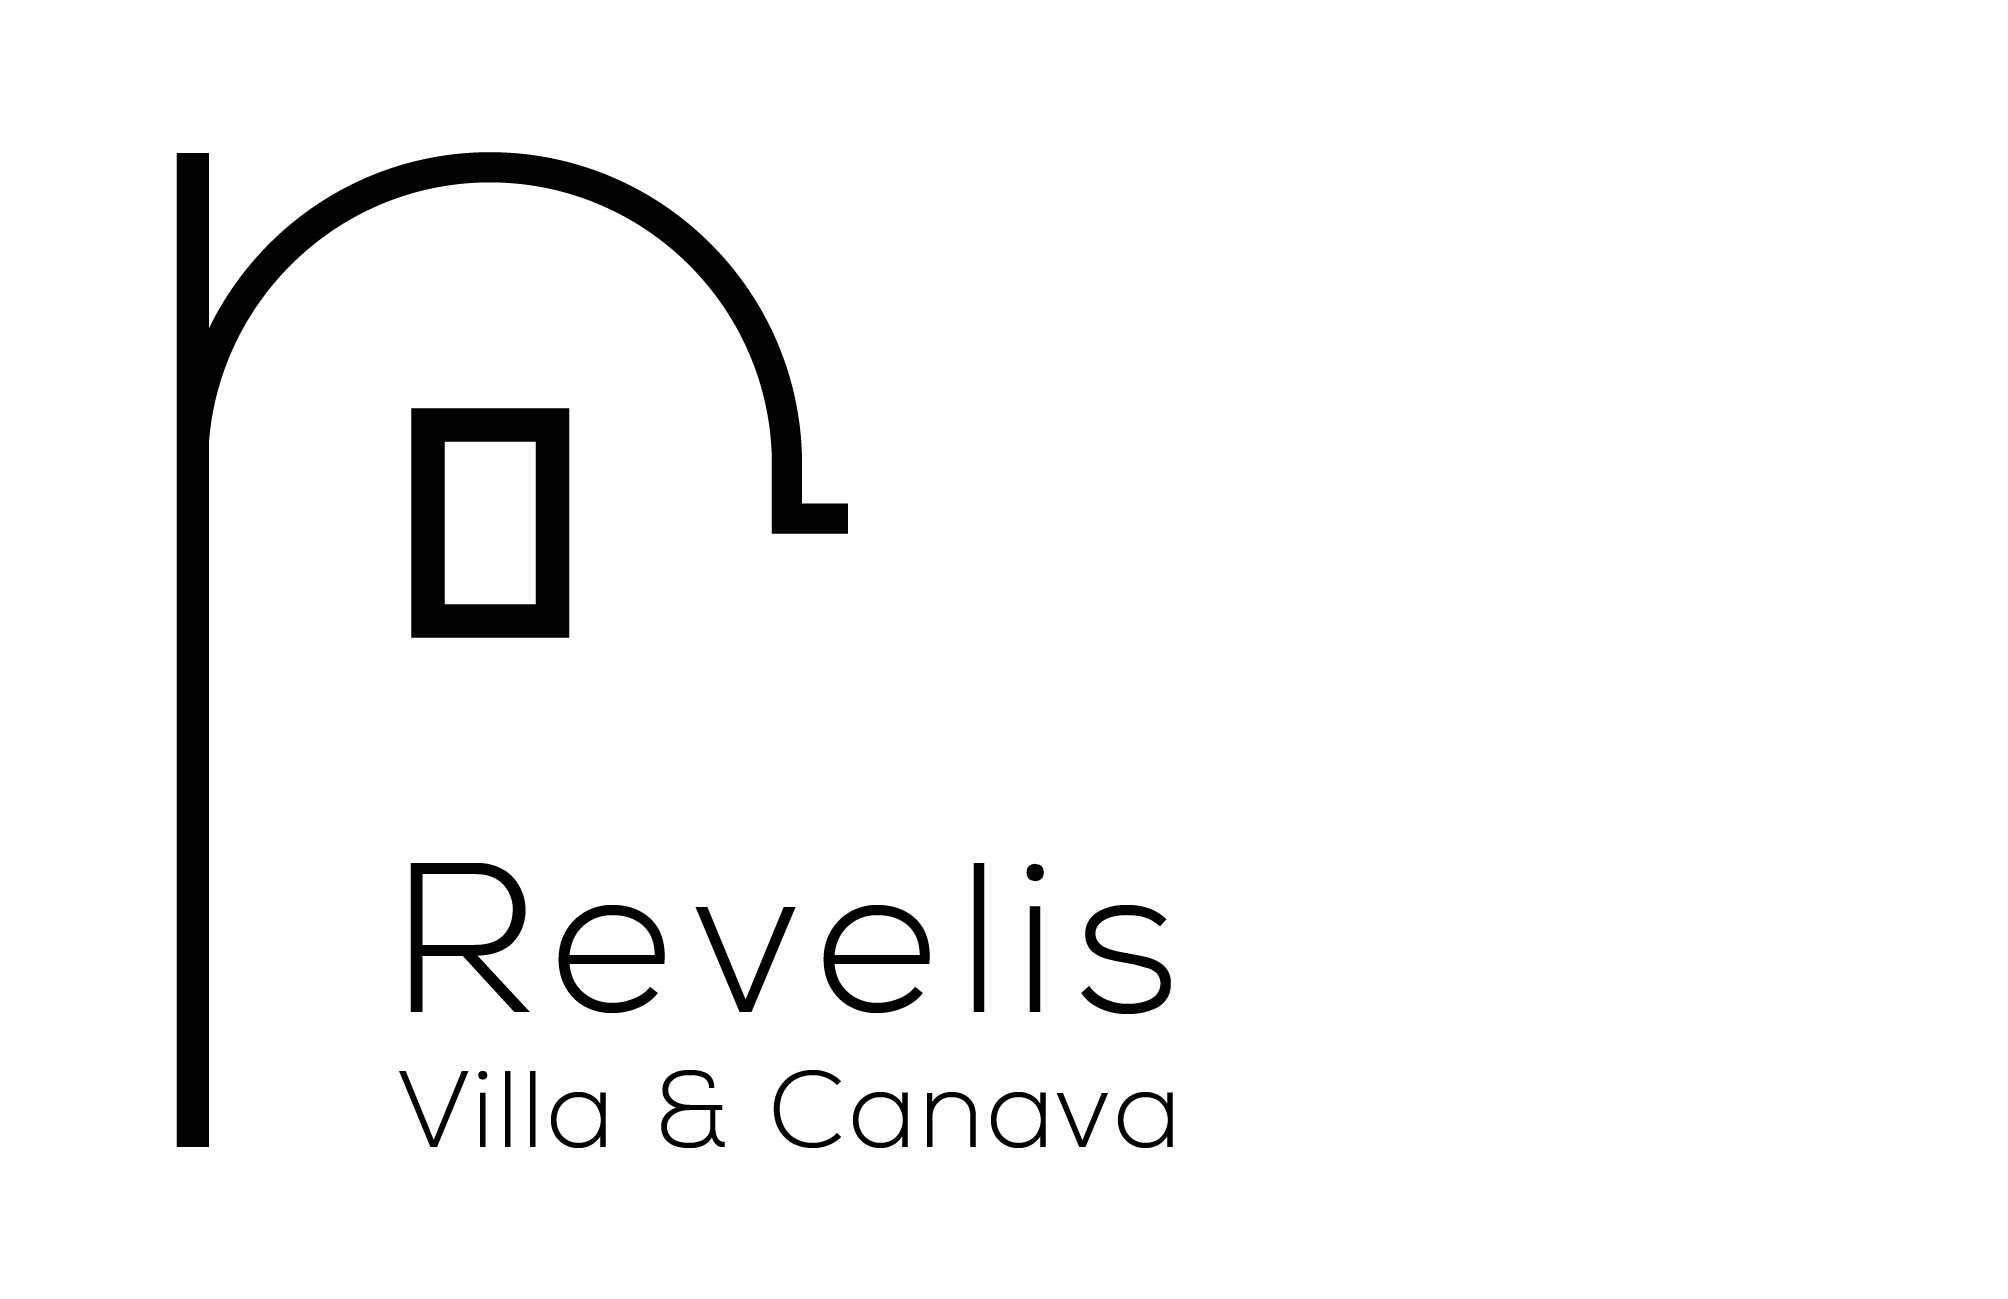 Revellis Villa & Canava - Luxury Villa & Canava in Fira, Santorini